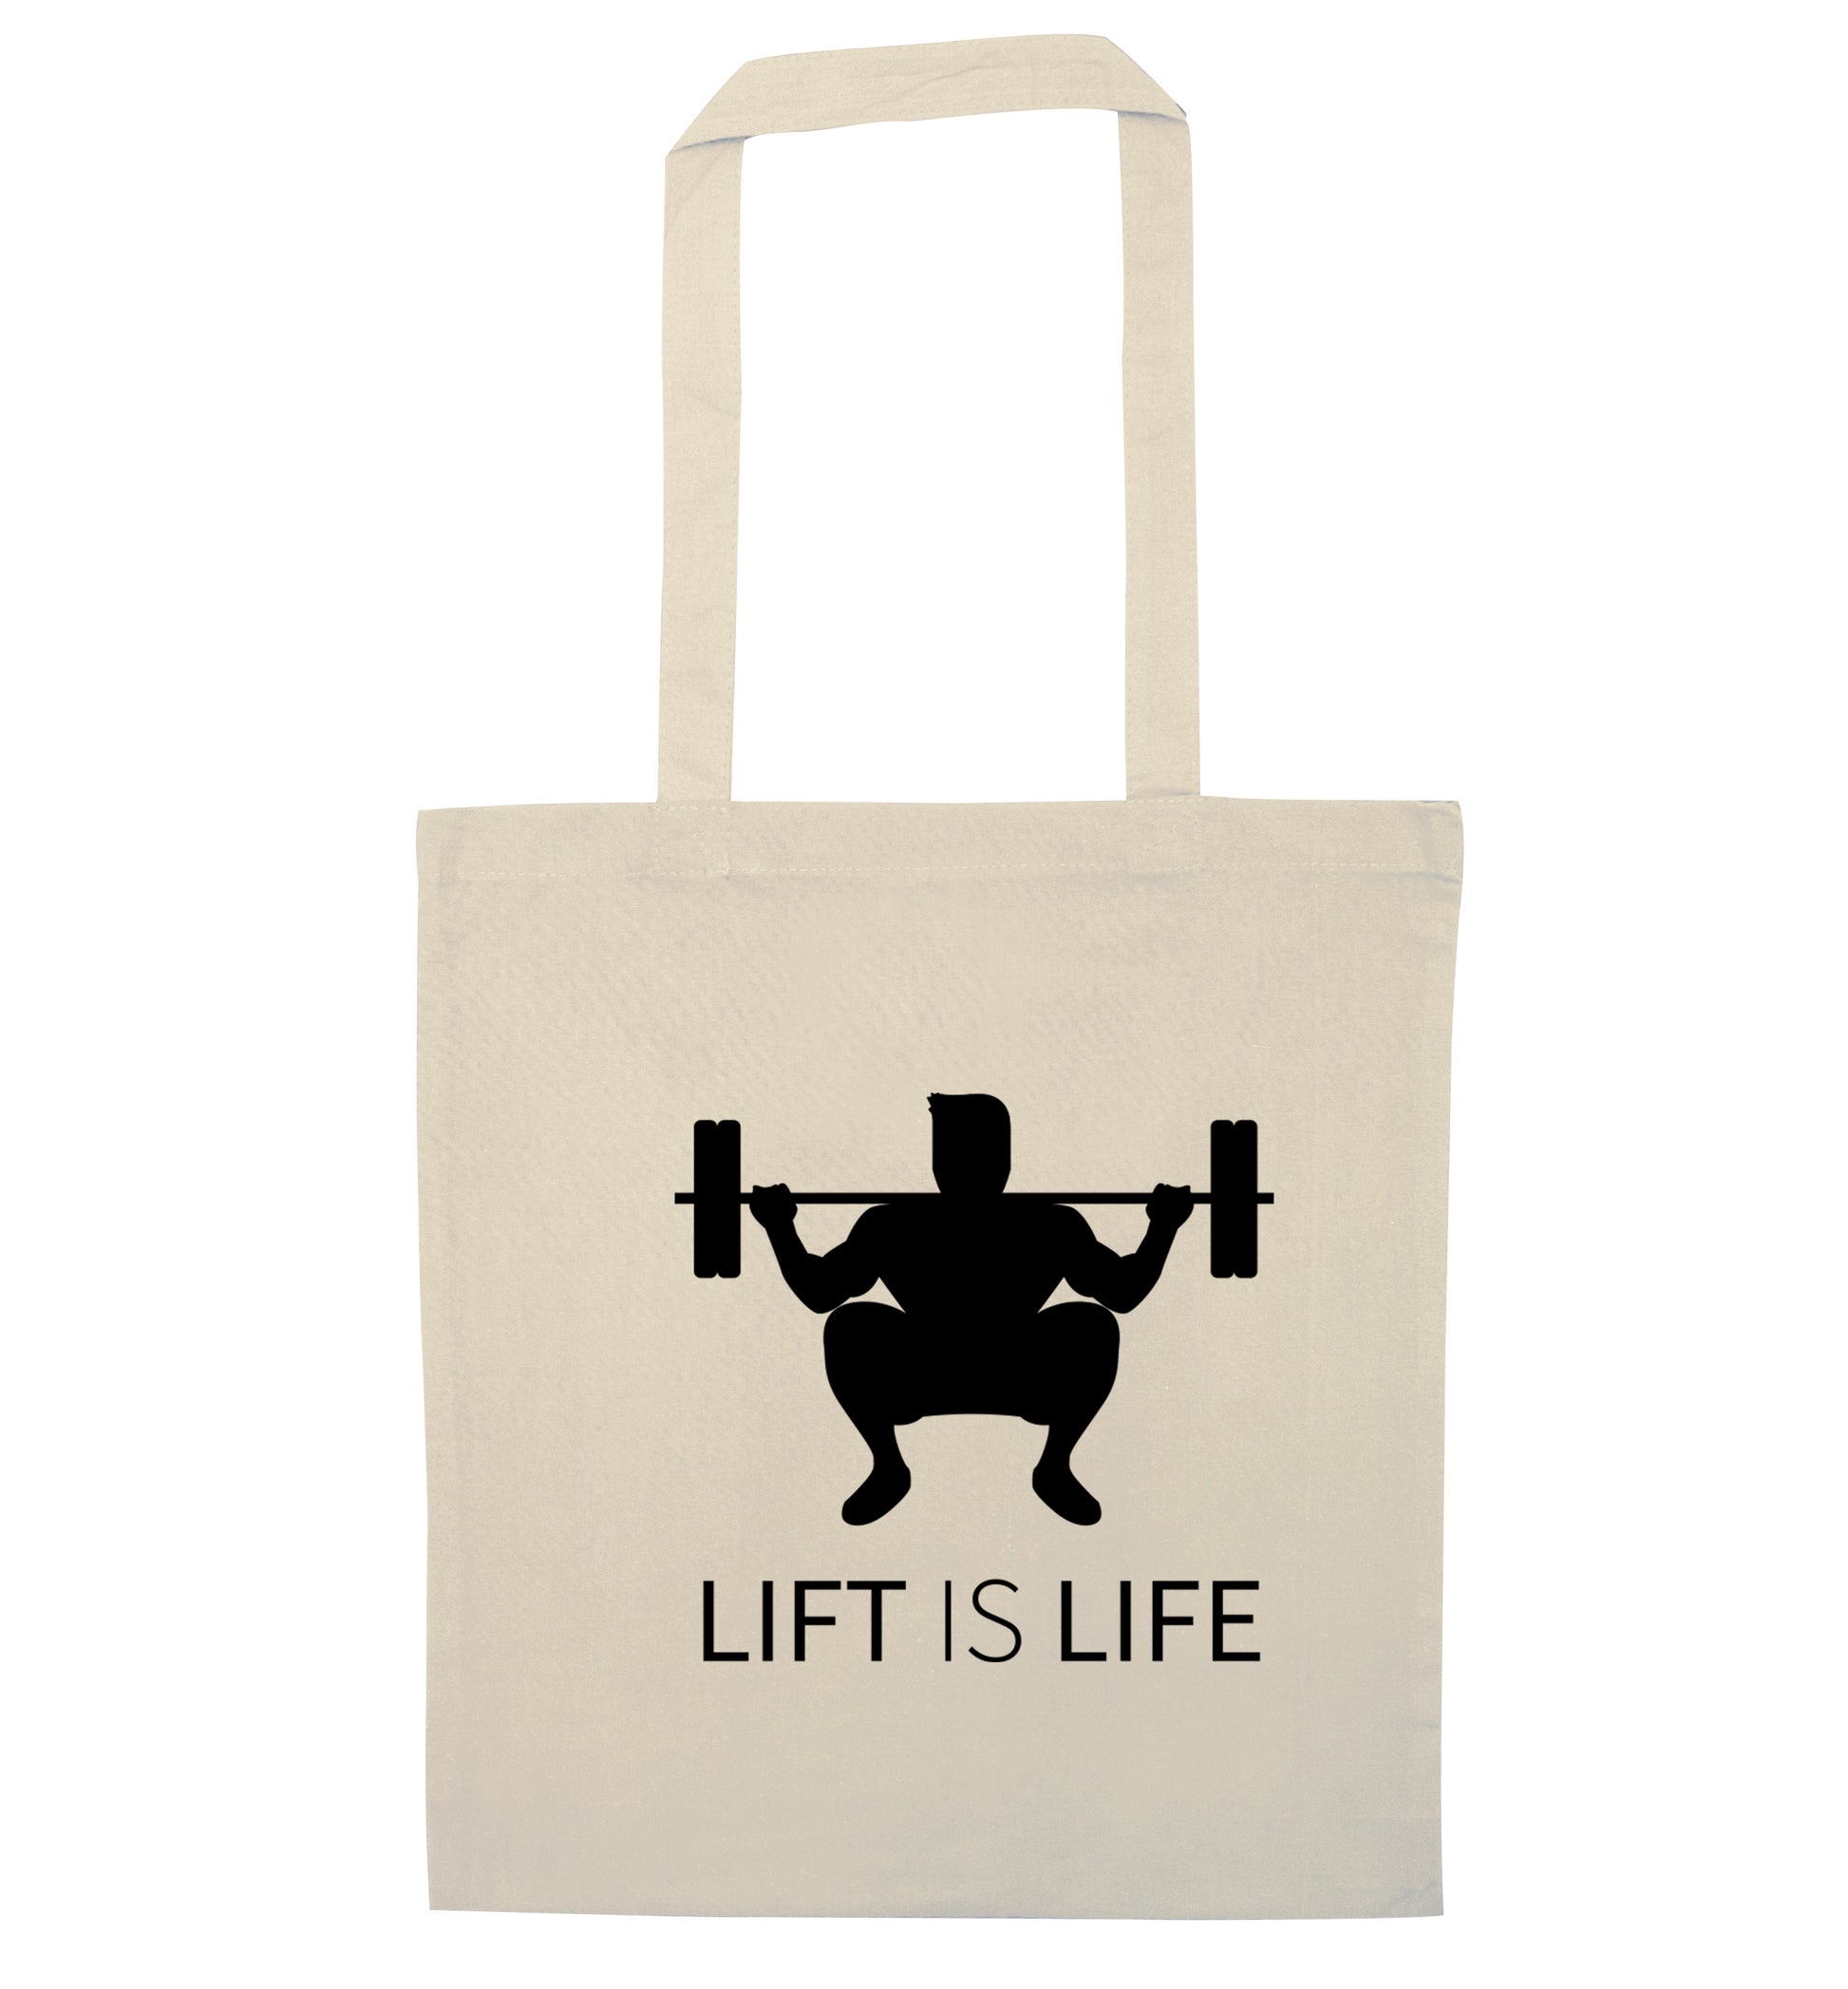 Lift is life natural tote bag